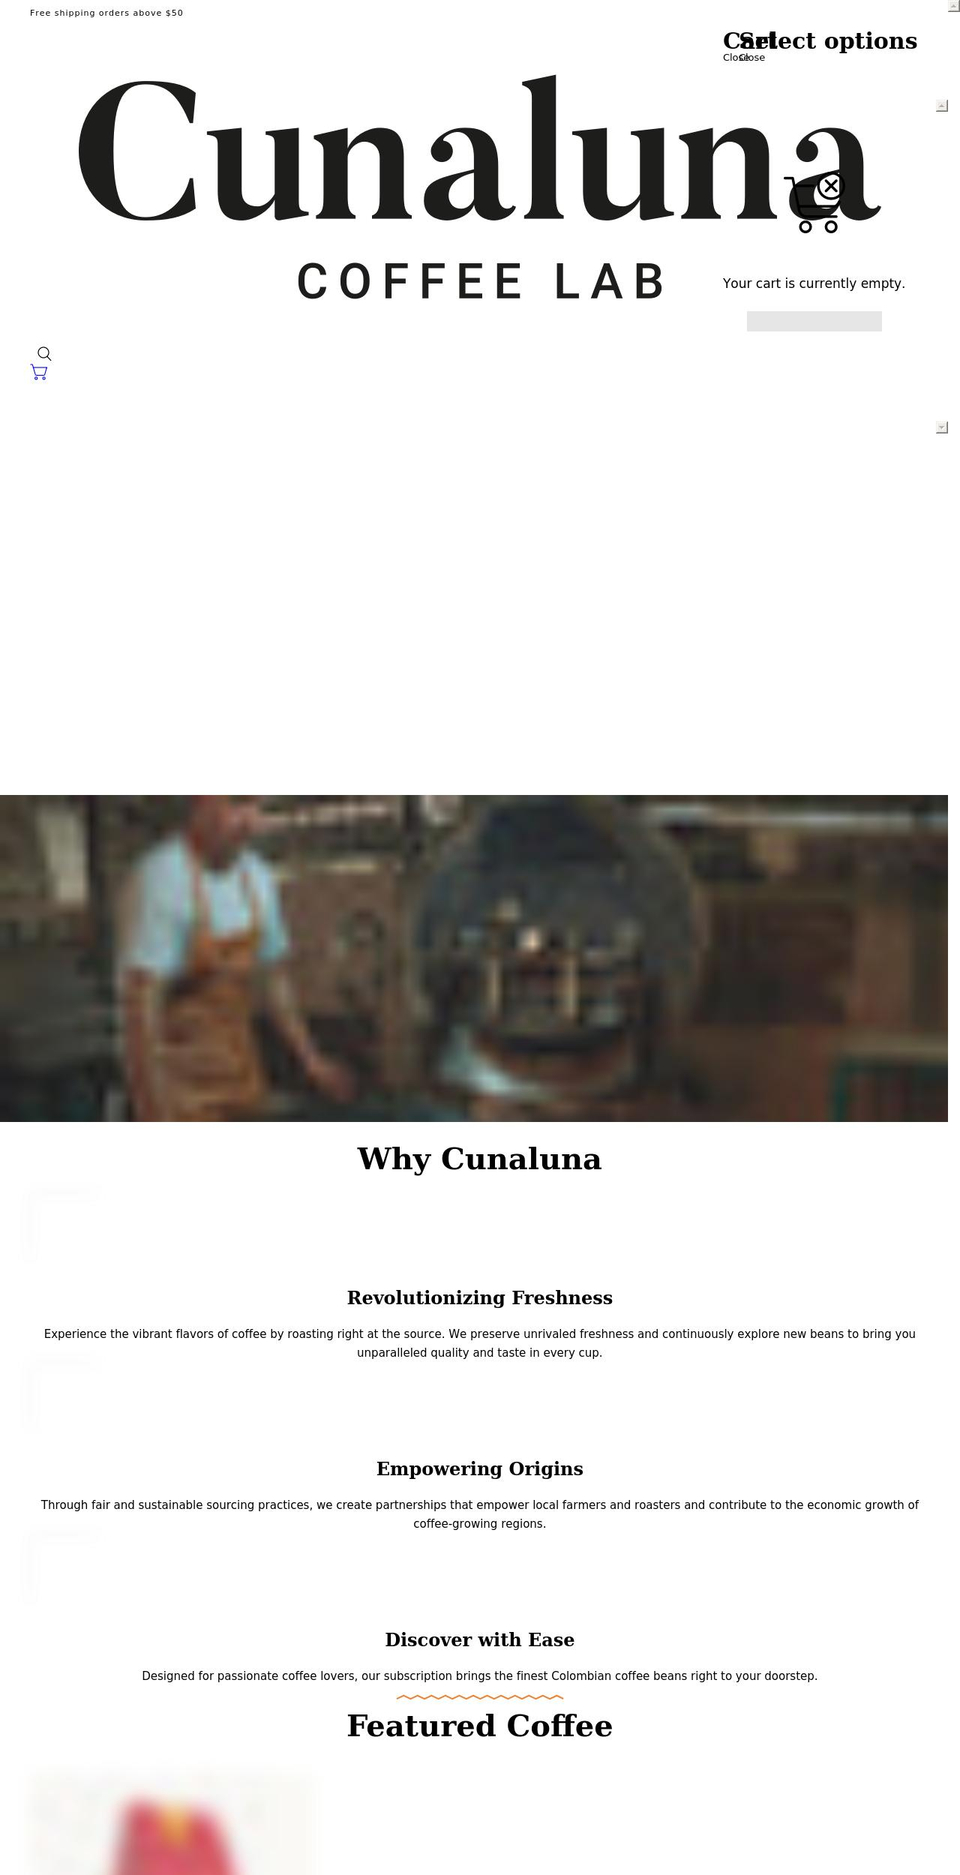 cunaluna.com shopify website screenshot